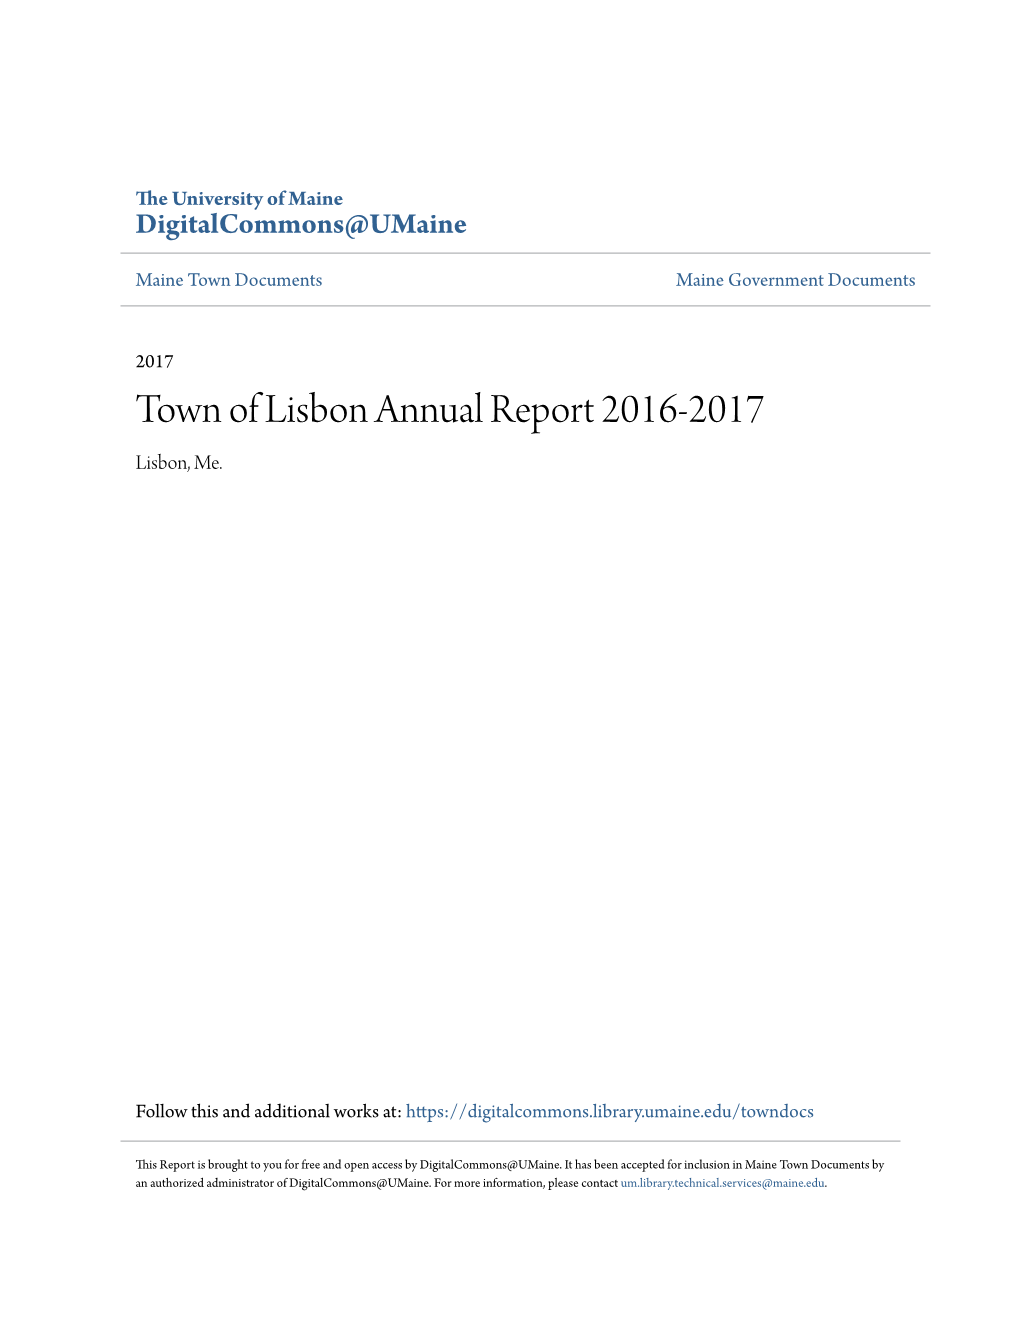 Town of Lisbon Annual Report 2016-2017 Lisbon, Me